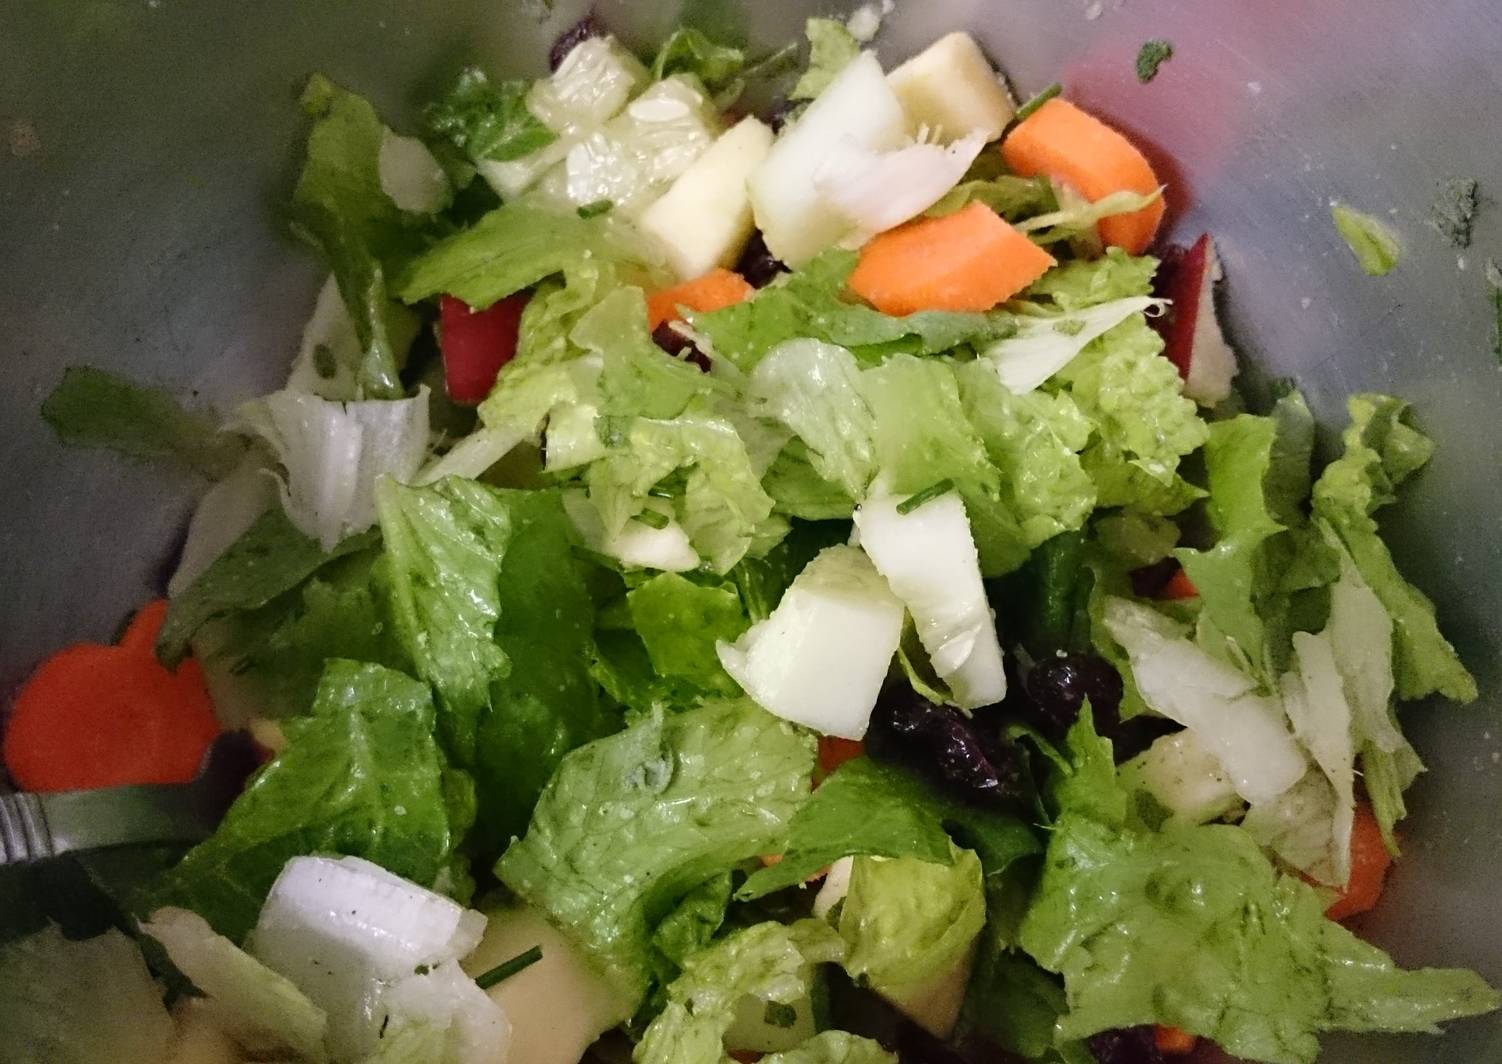 Kitchen Sink Salad Recipe by qtmonki01 - Cookpad